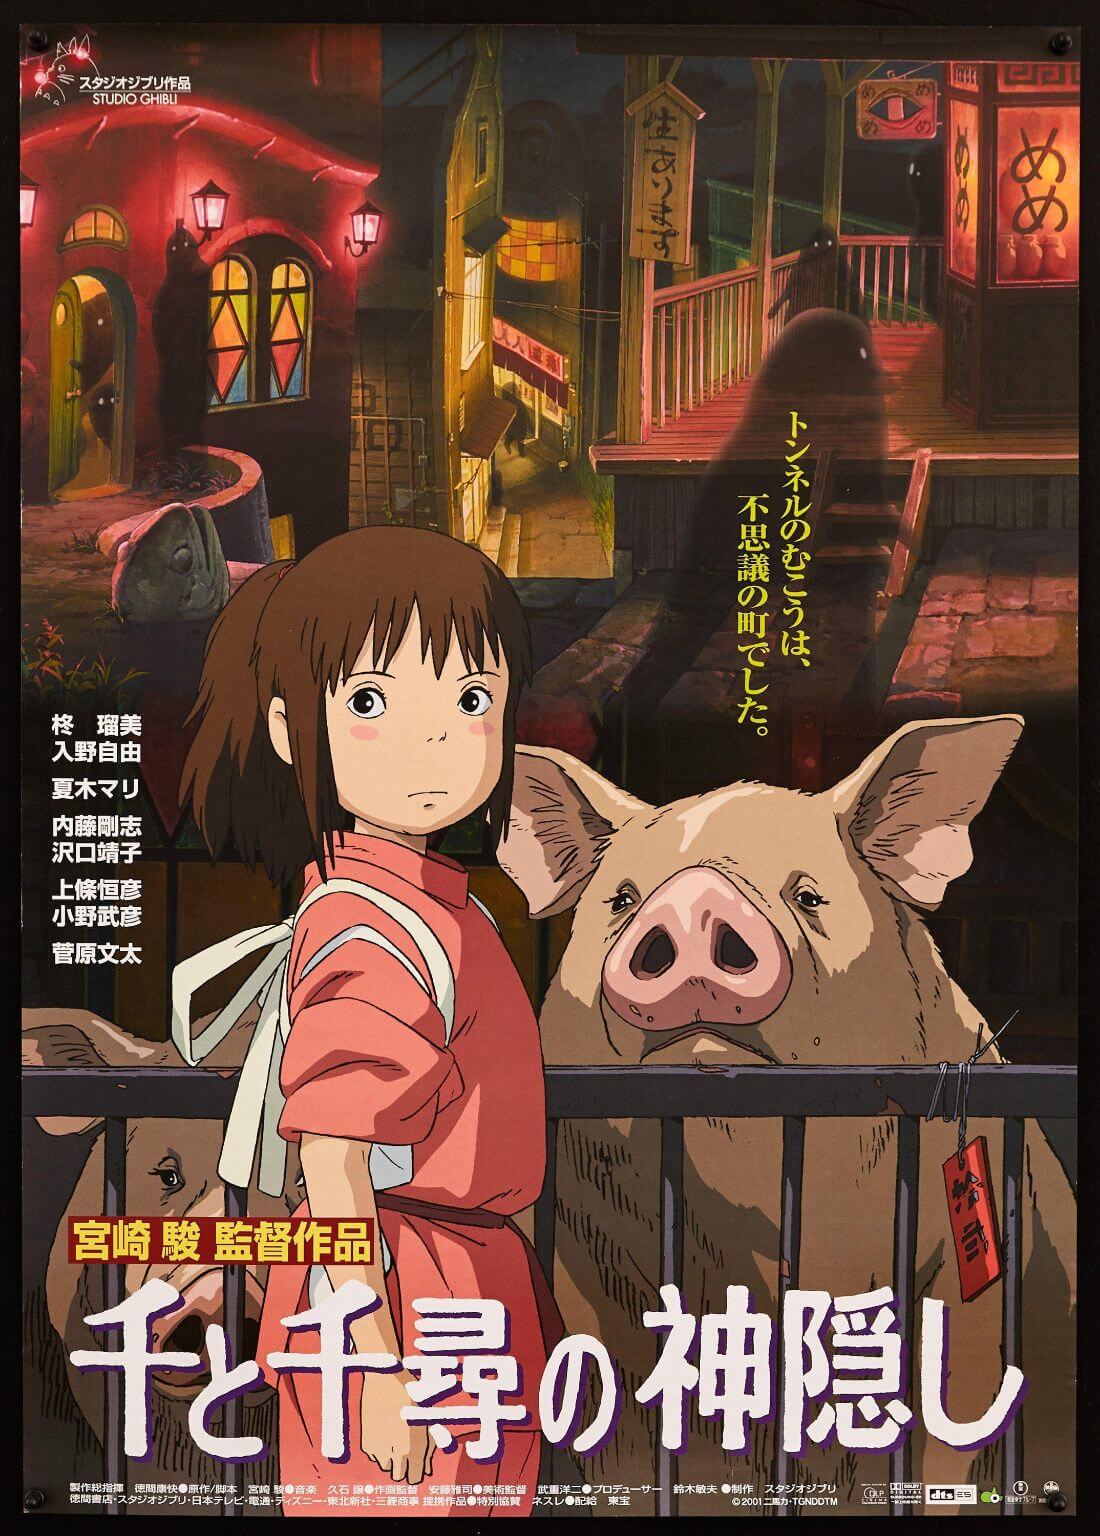 Miyazaki Hayao Ghibli Studio Anime Movie Posters Kraft Paper